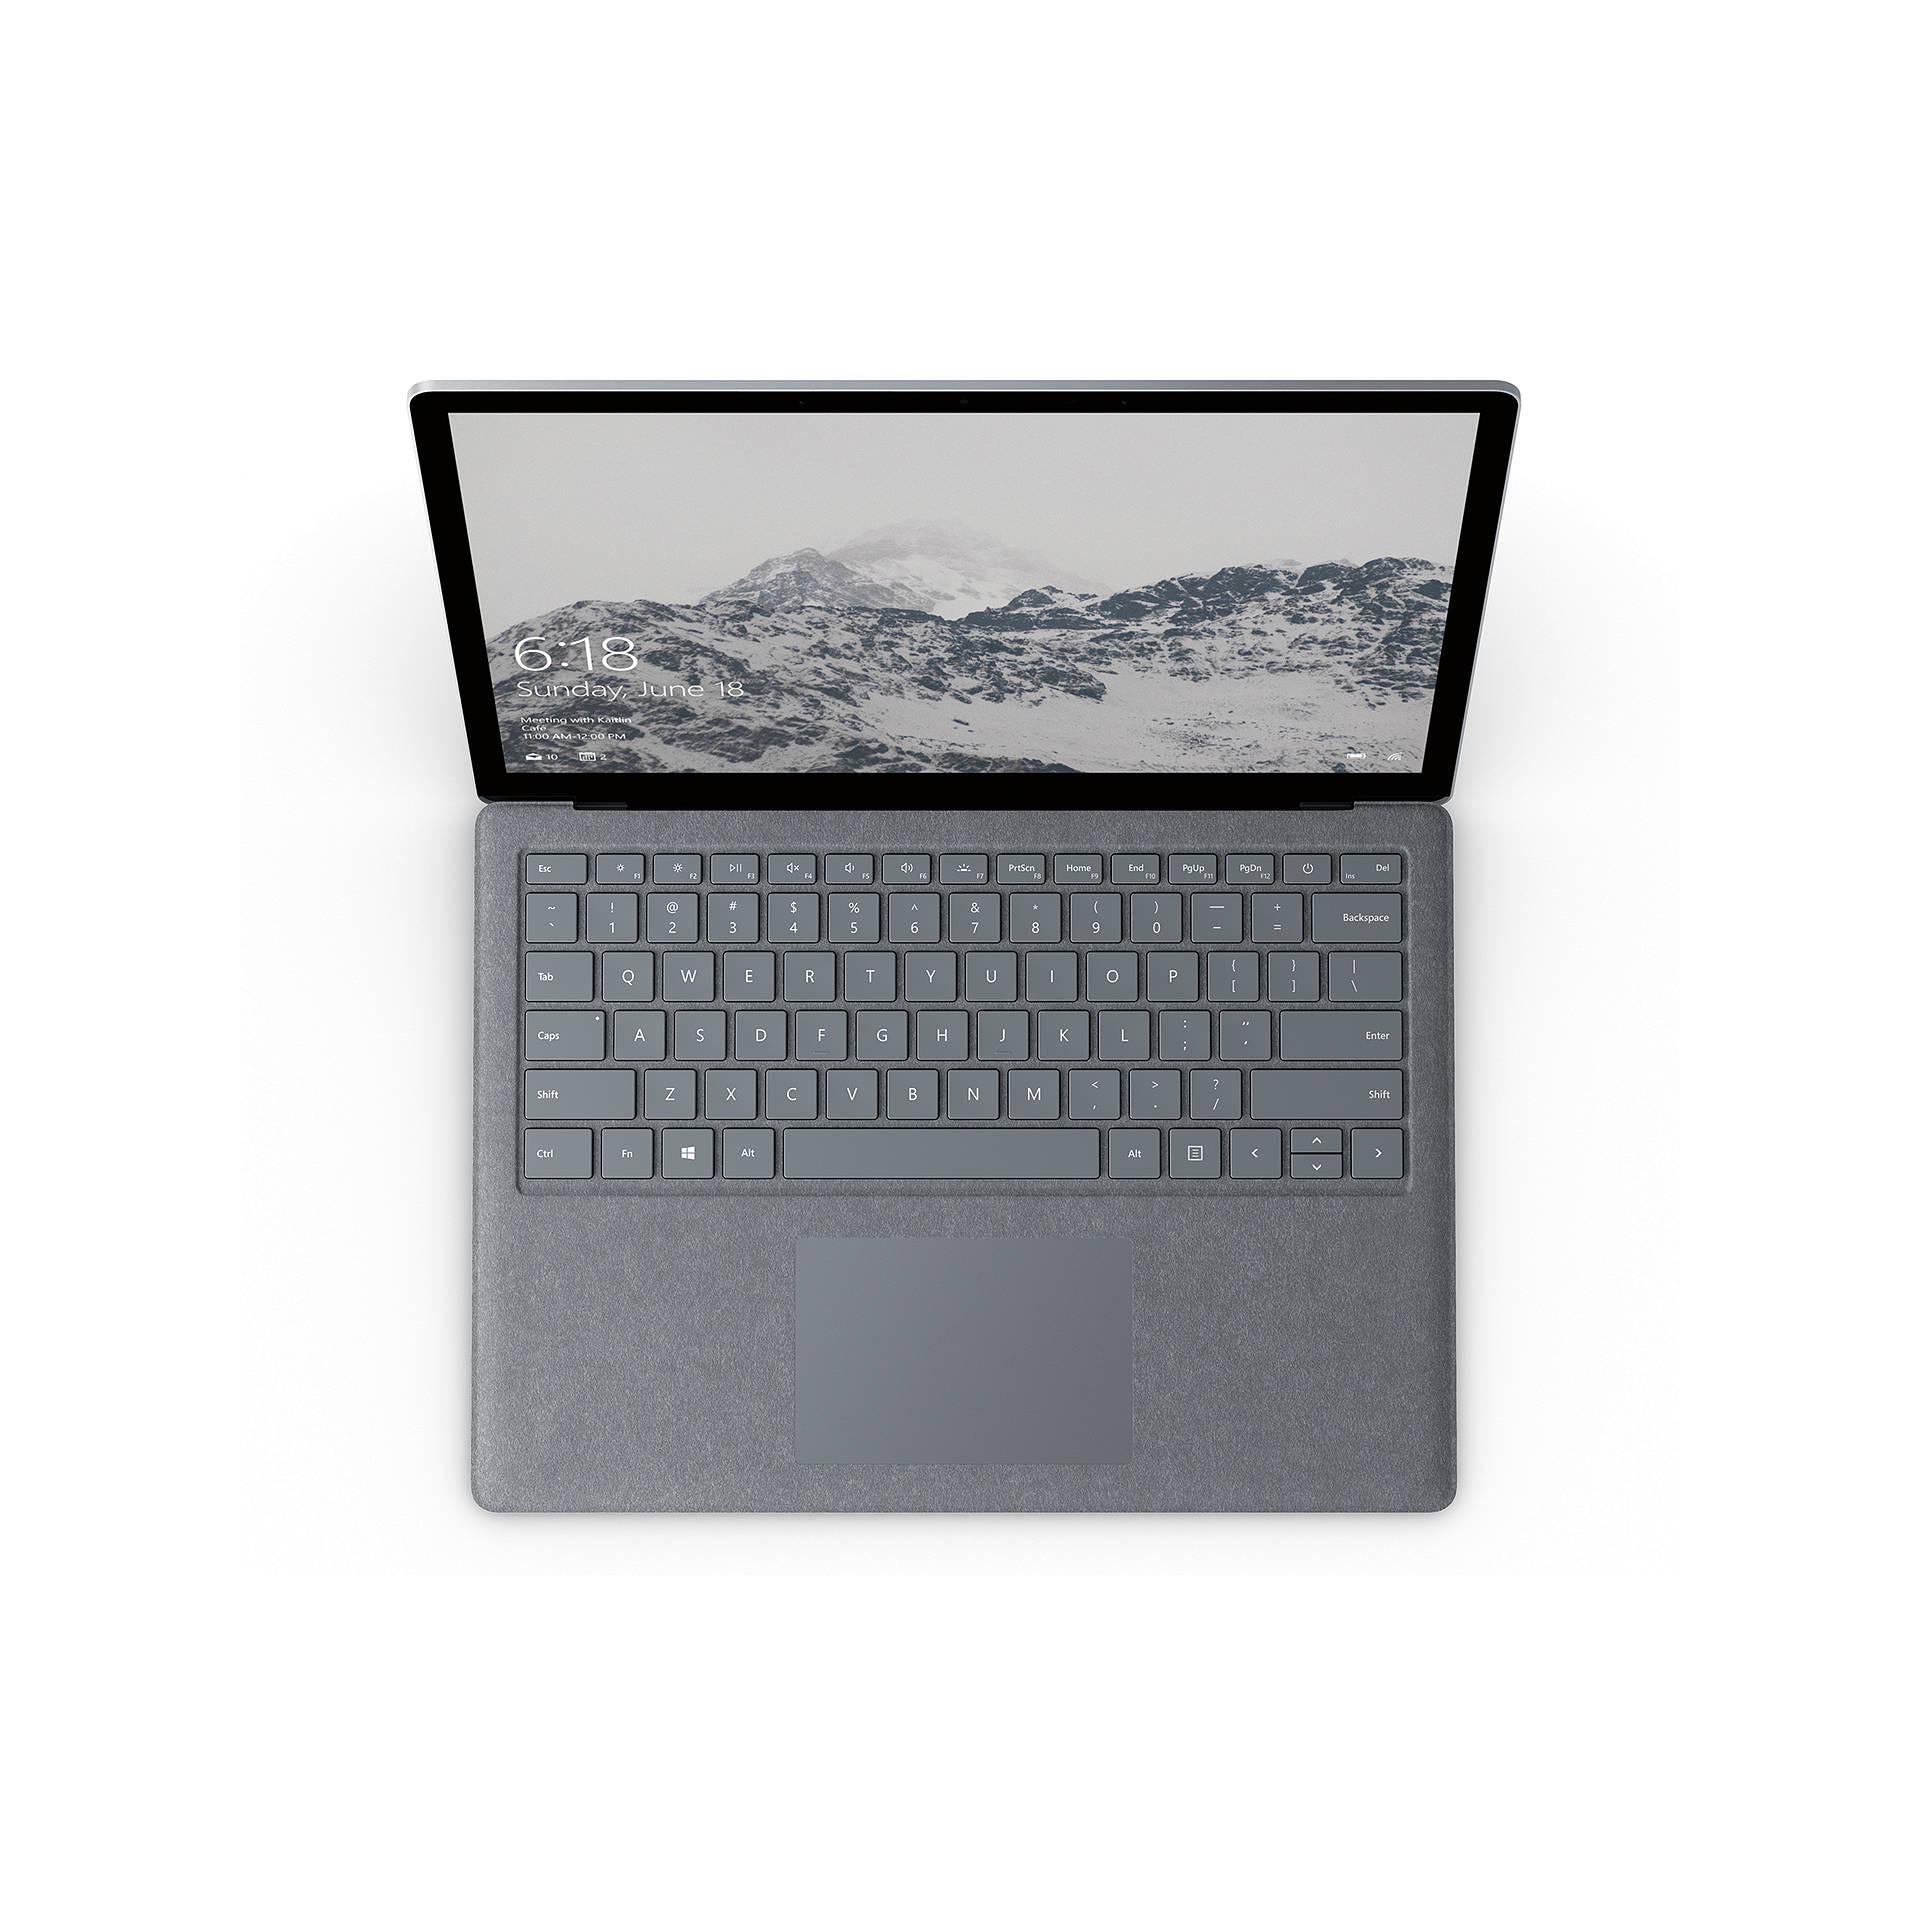 Microsoft Surface Laptop 1769, Intel Core i5, 4GB RAM, 128GB SSD, 13.5" PixelSense Display, Platinum